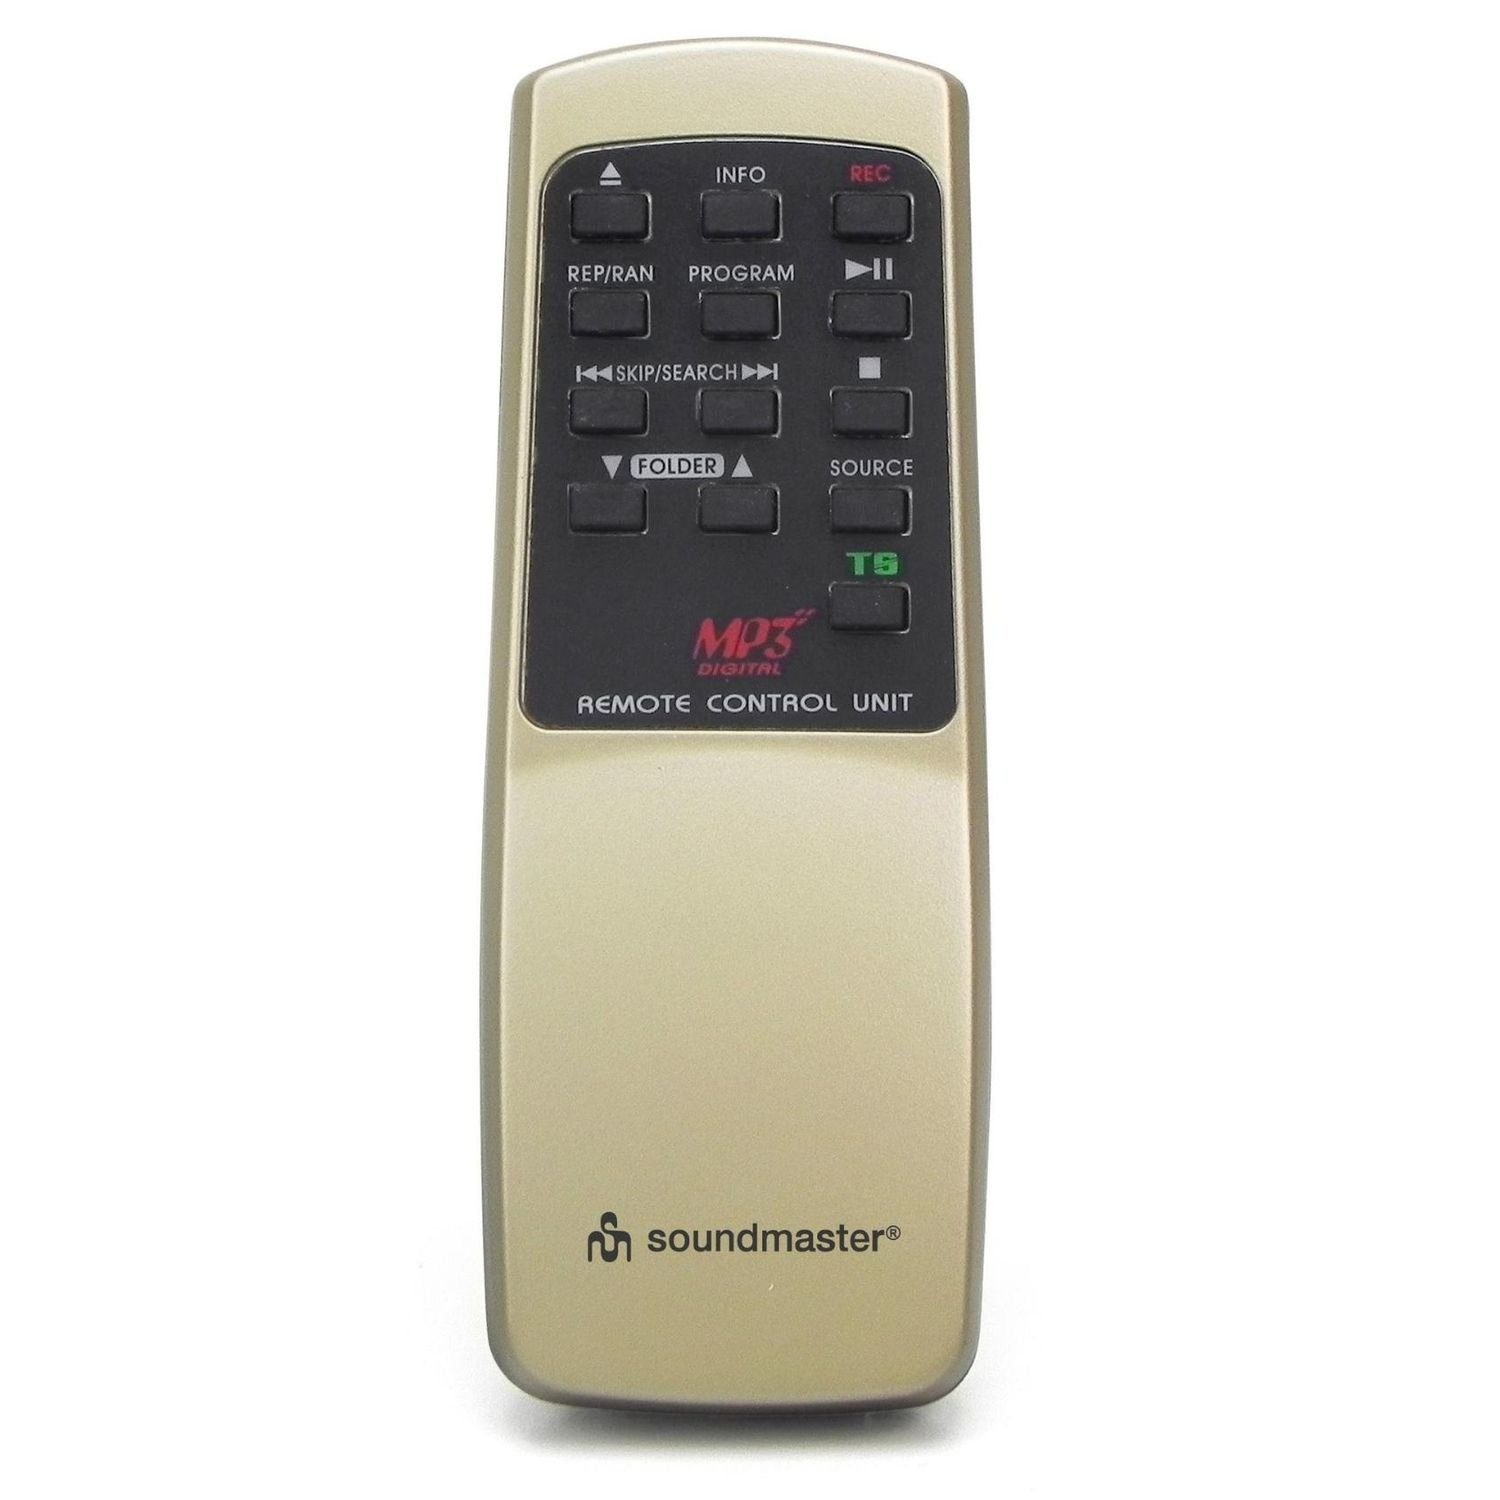 MP3 Retro Kompaktanlage CD Encoding USB Kassette Kompaktanlage Plattenspieler NR540 Soundmaster